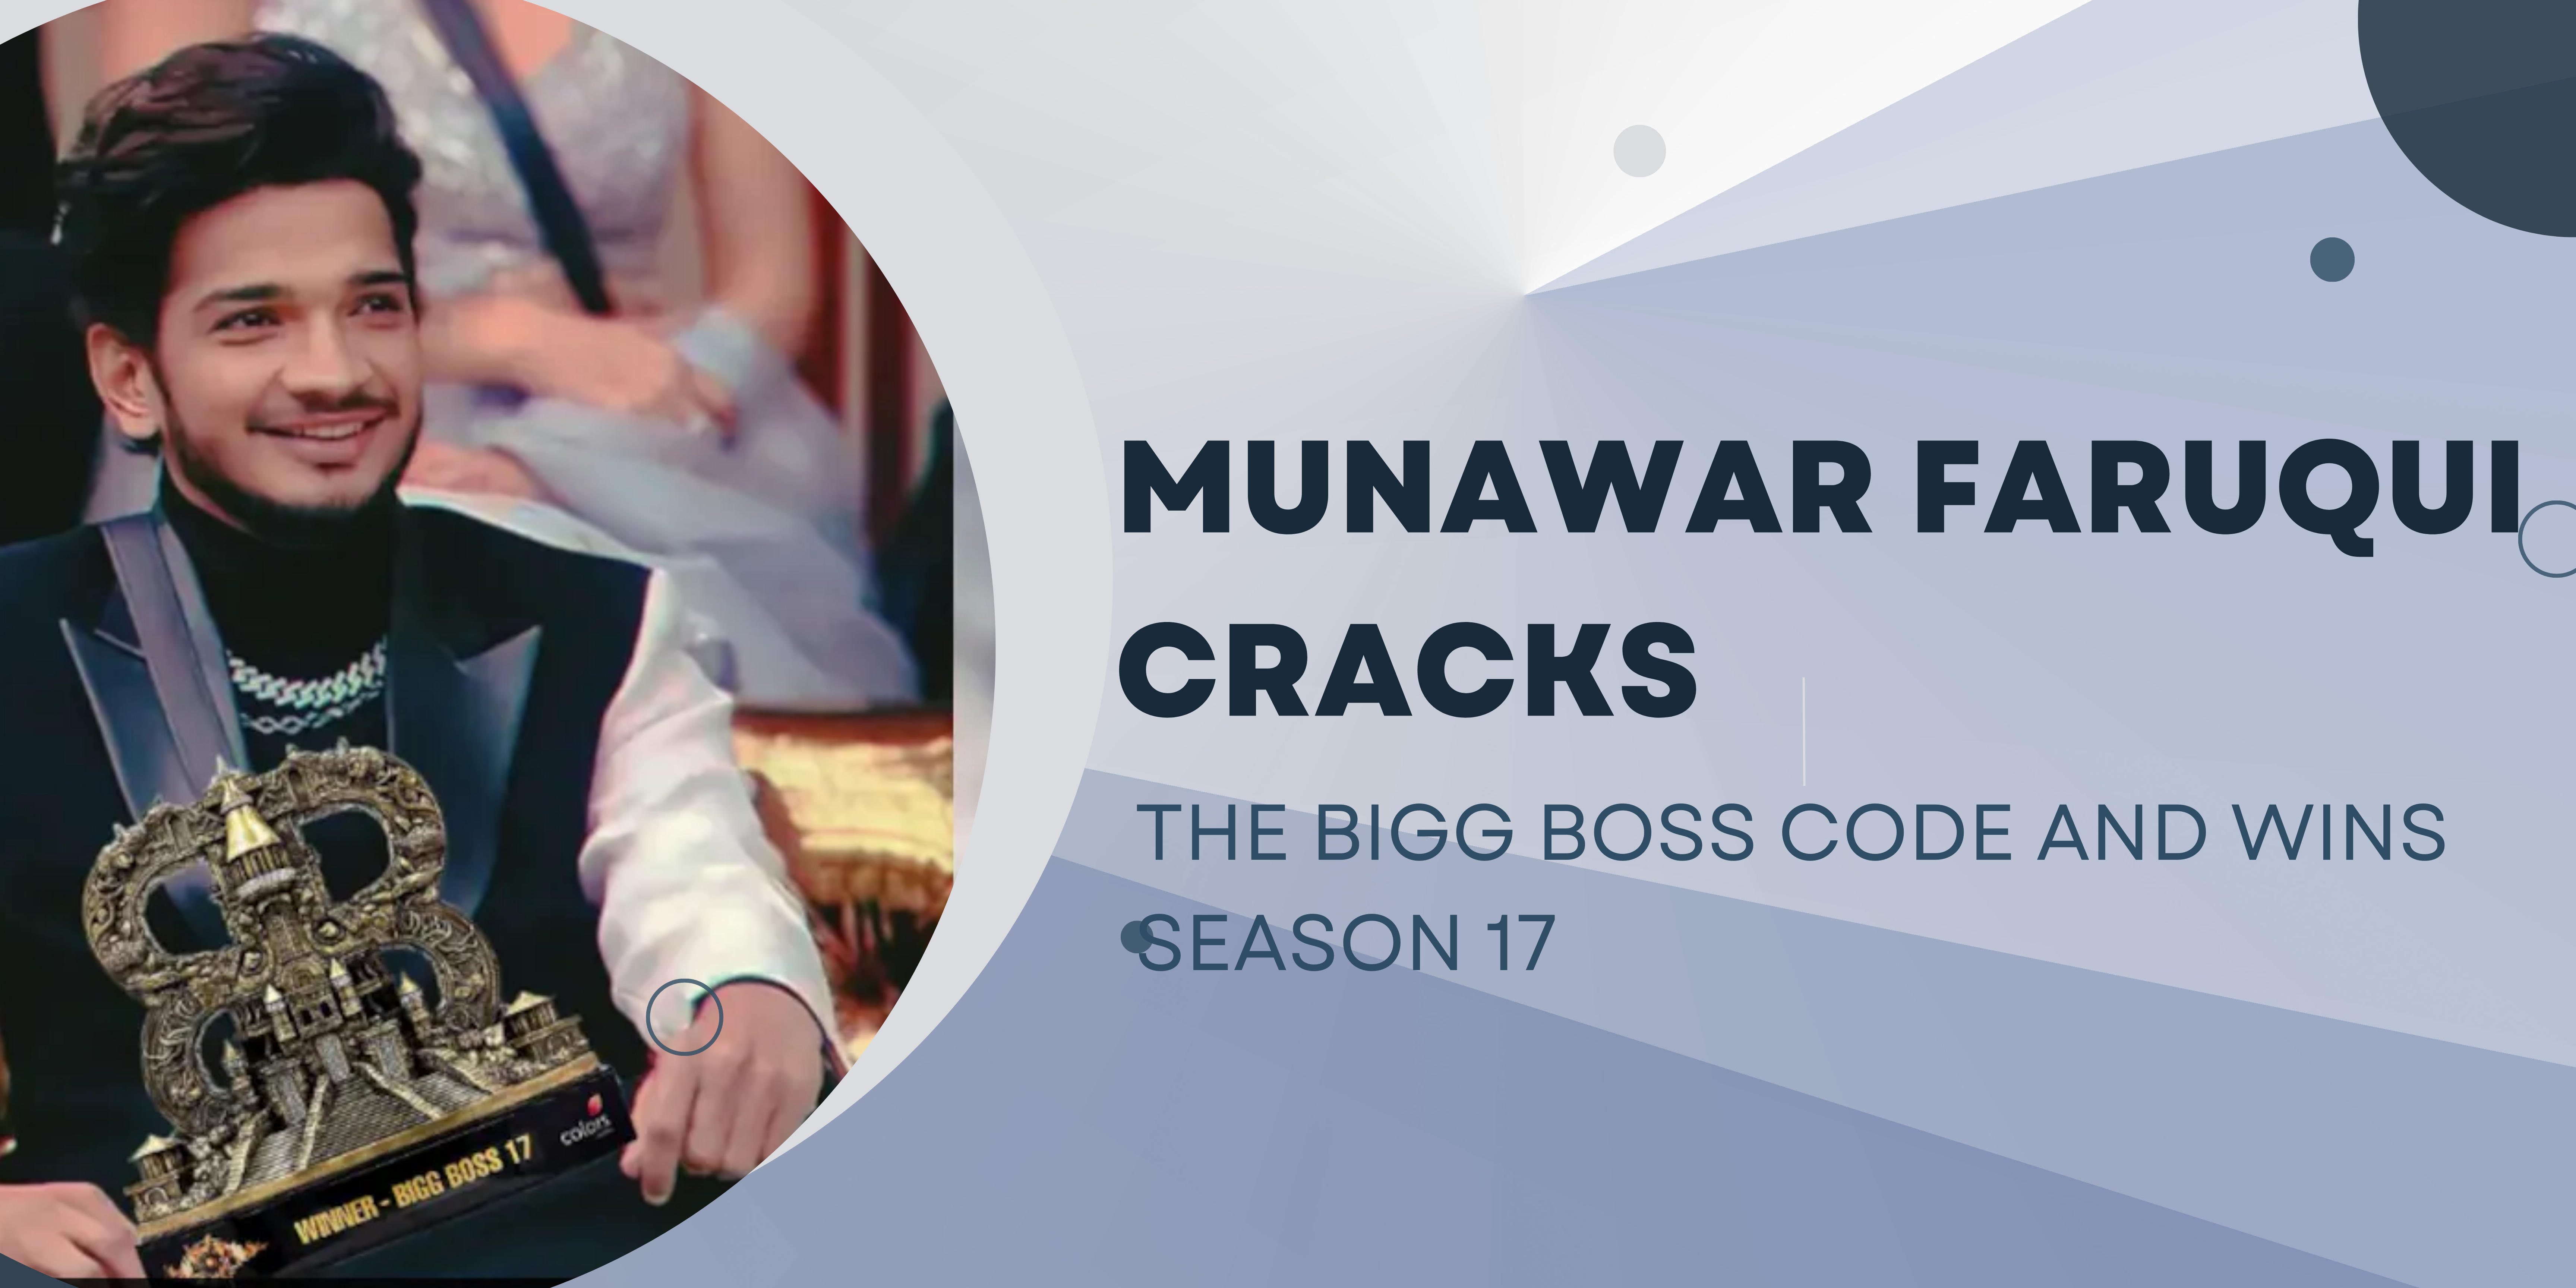 Munawar Faruqui Cracks the Bigg Boss Code and Wins Season 17